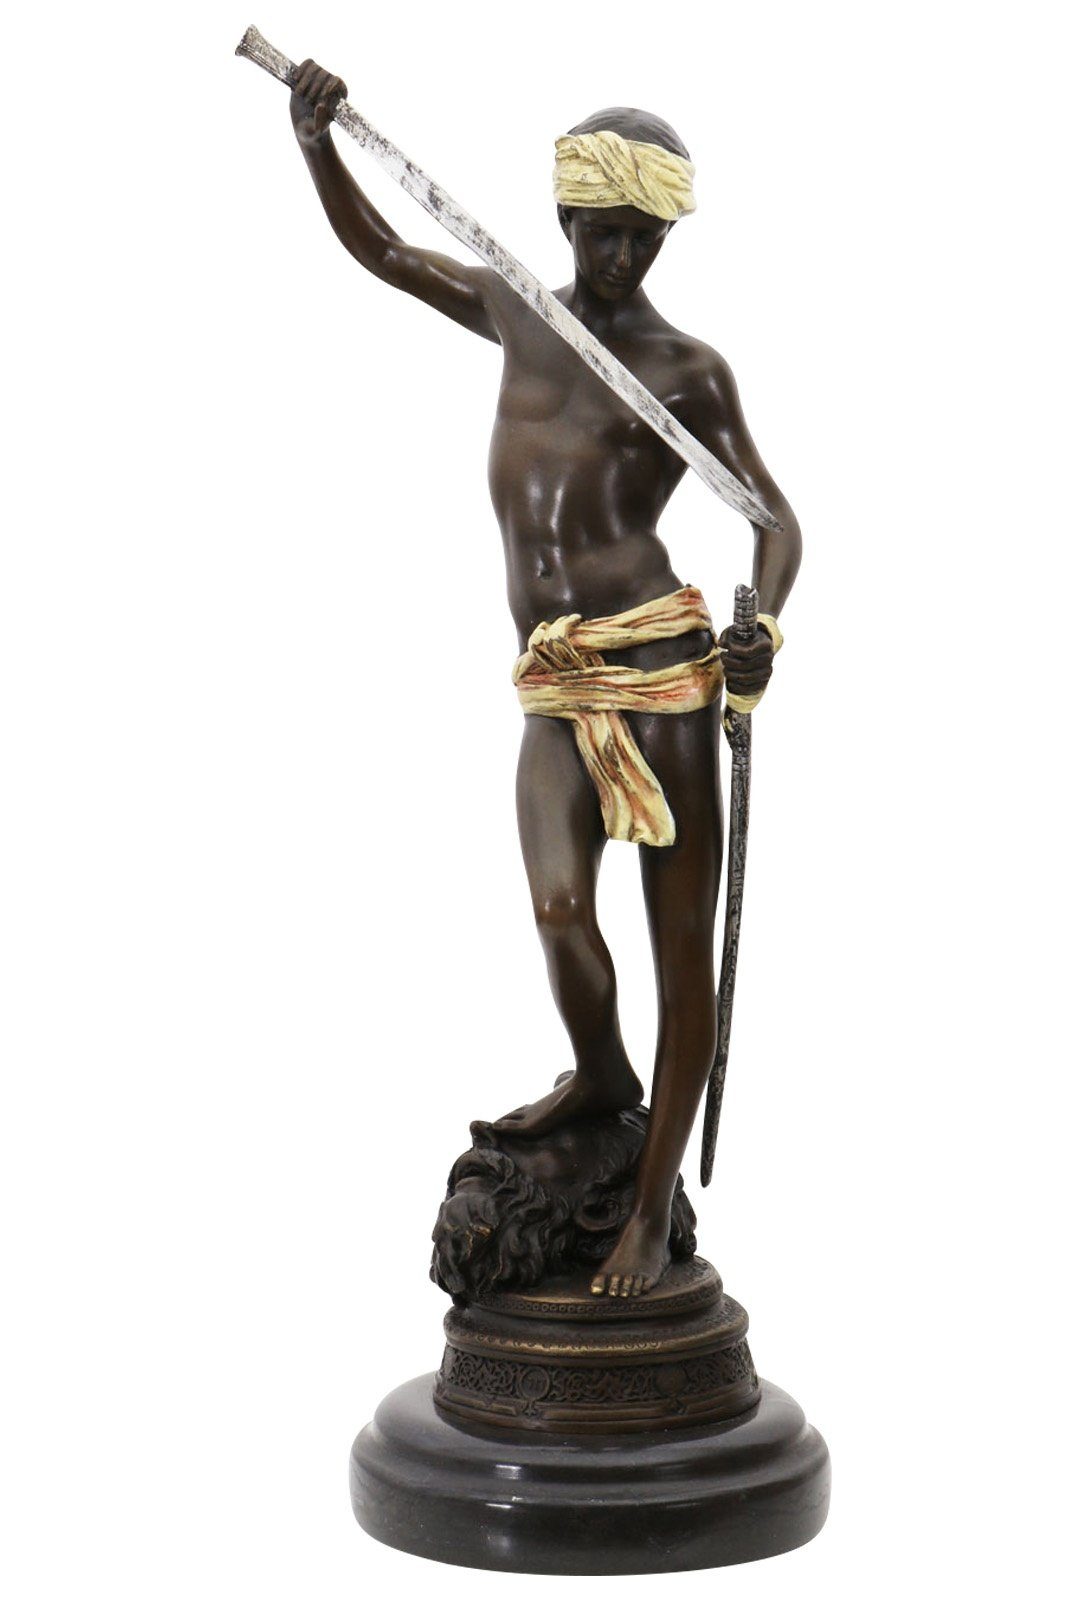 David Skulptur im Antik-Stil Aubaho Goliath Bronze Statue Figur Bronzeskulptur 33cm